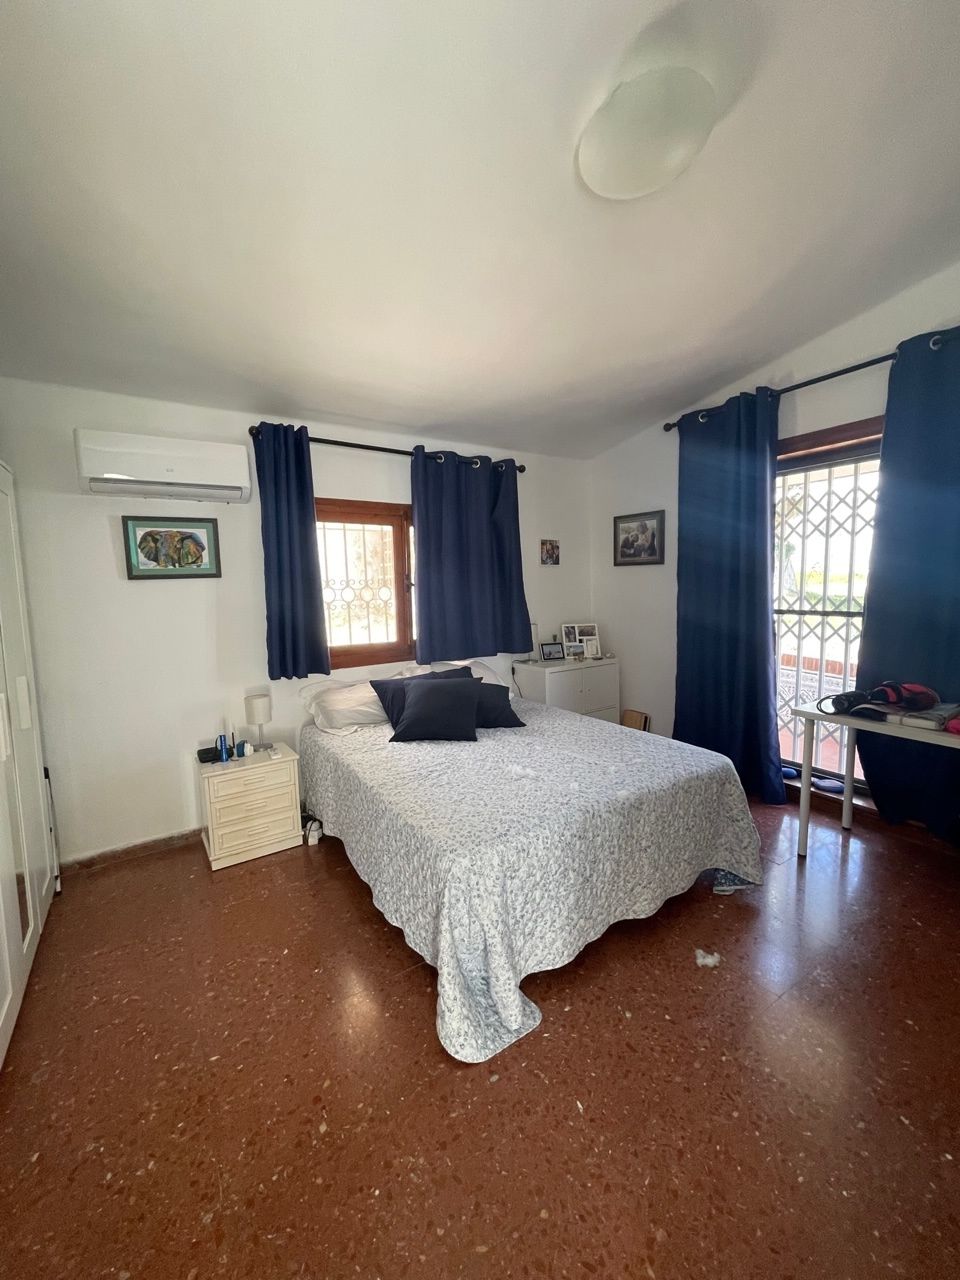 Villa 4BR à vendre à Fuente del Baden, Nerja